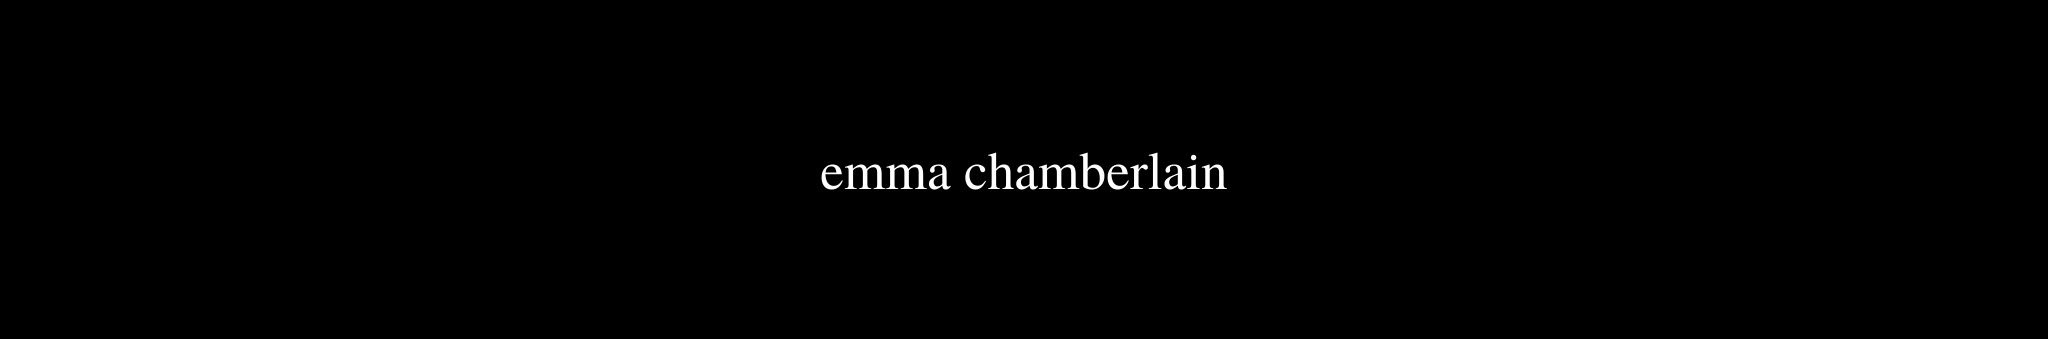 emma-chamberlain-banner